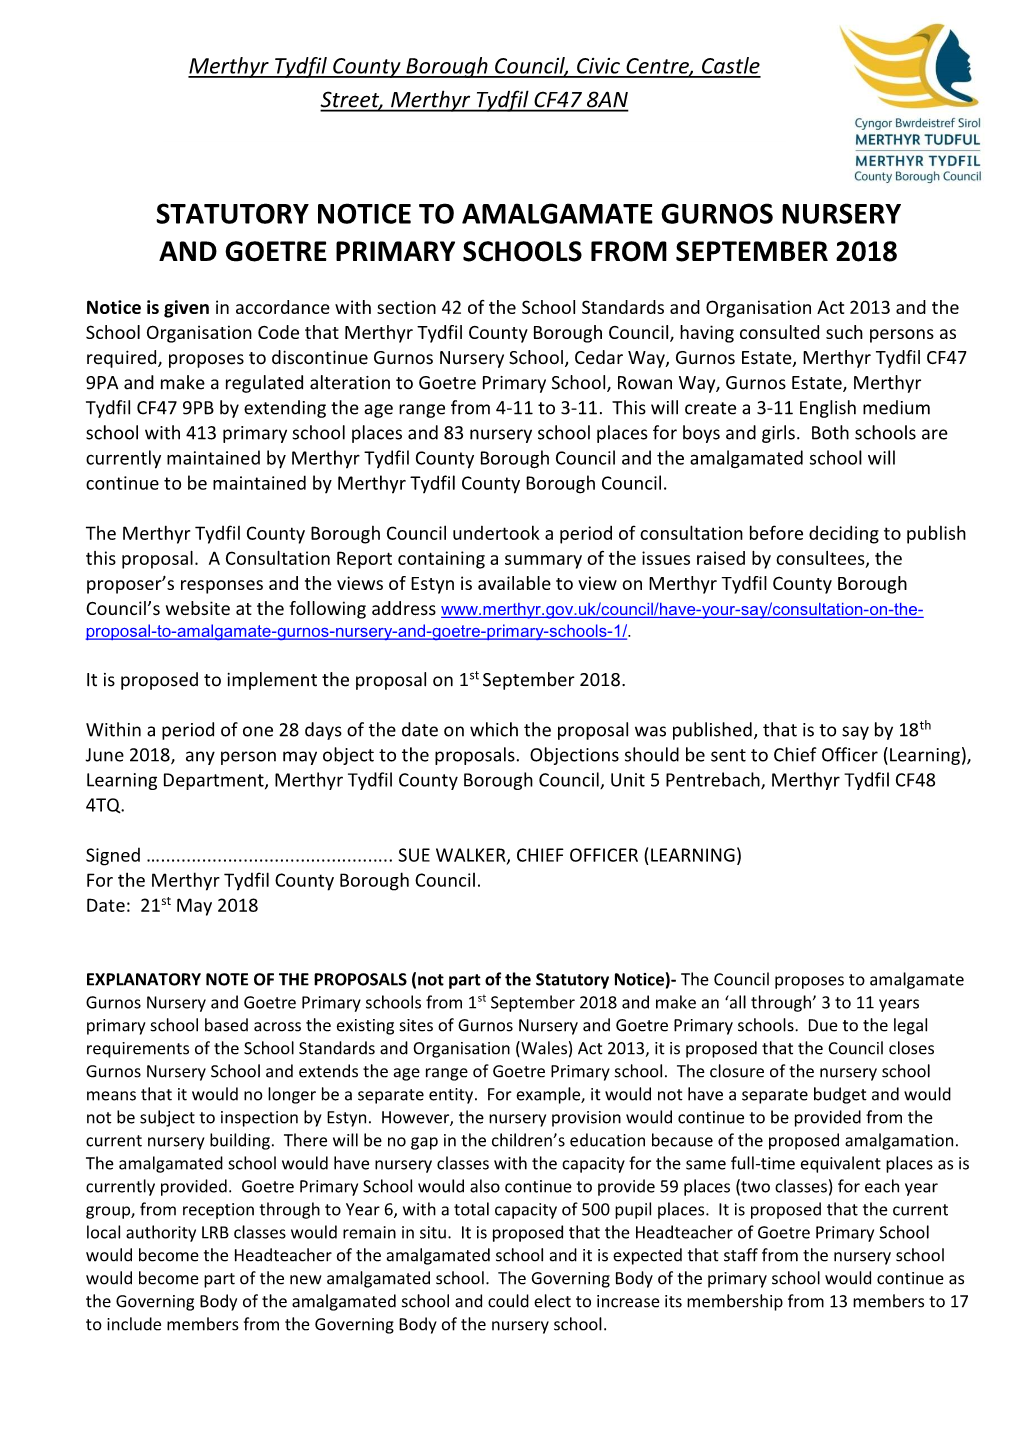 Statutory Notice to Amalgamate Gurnos Nursery and Goetre Primary Schools from September 2018